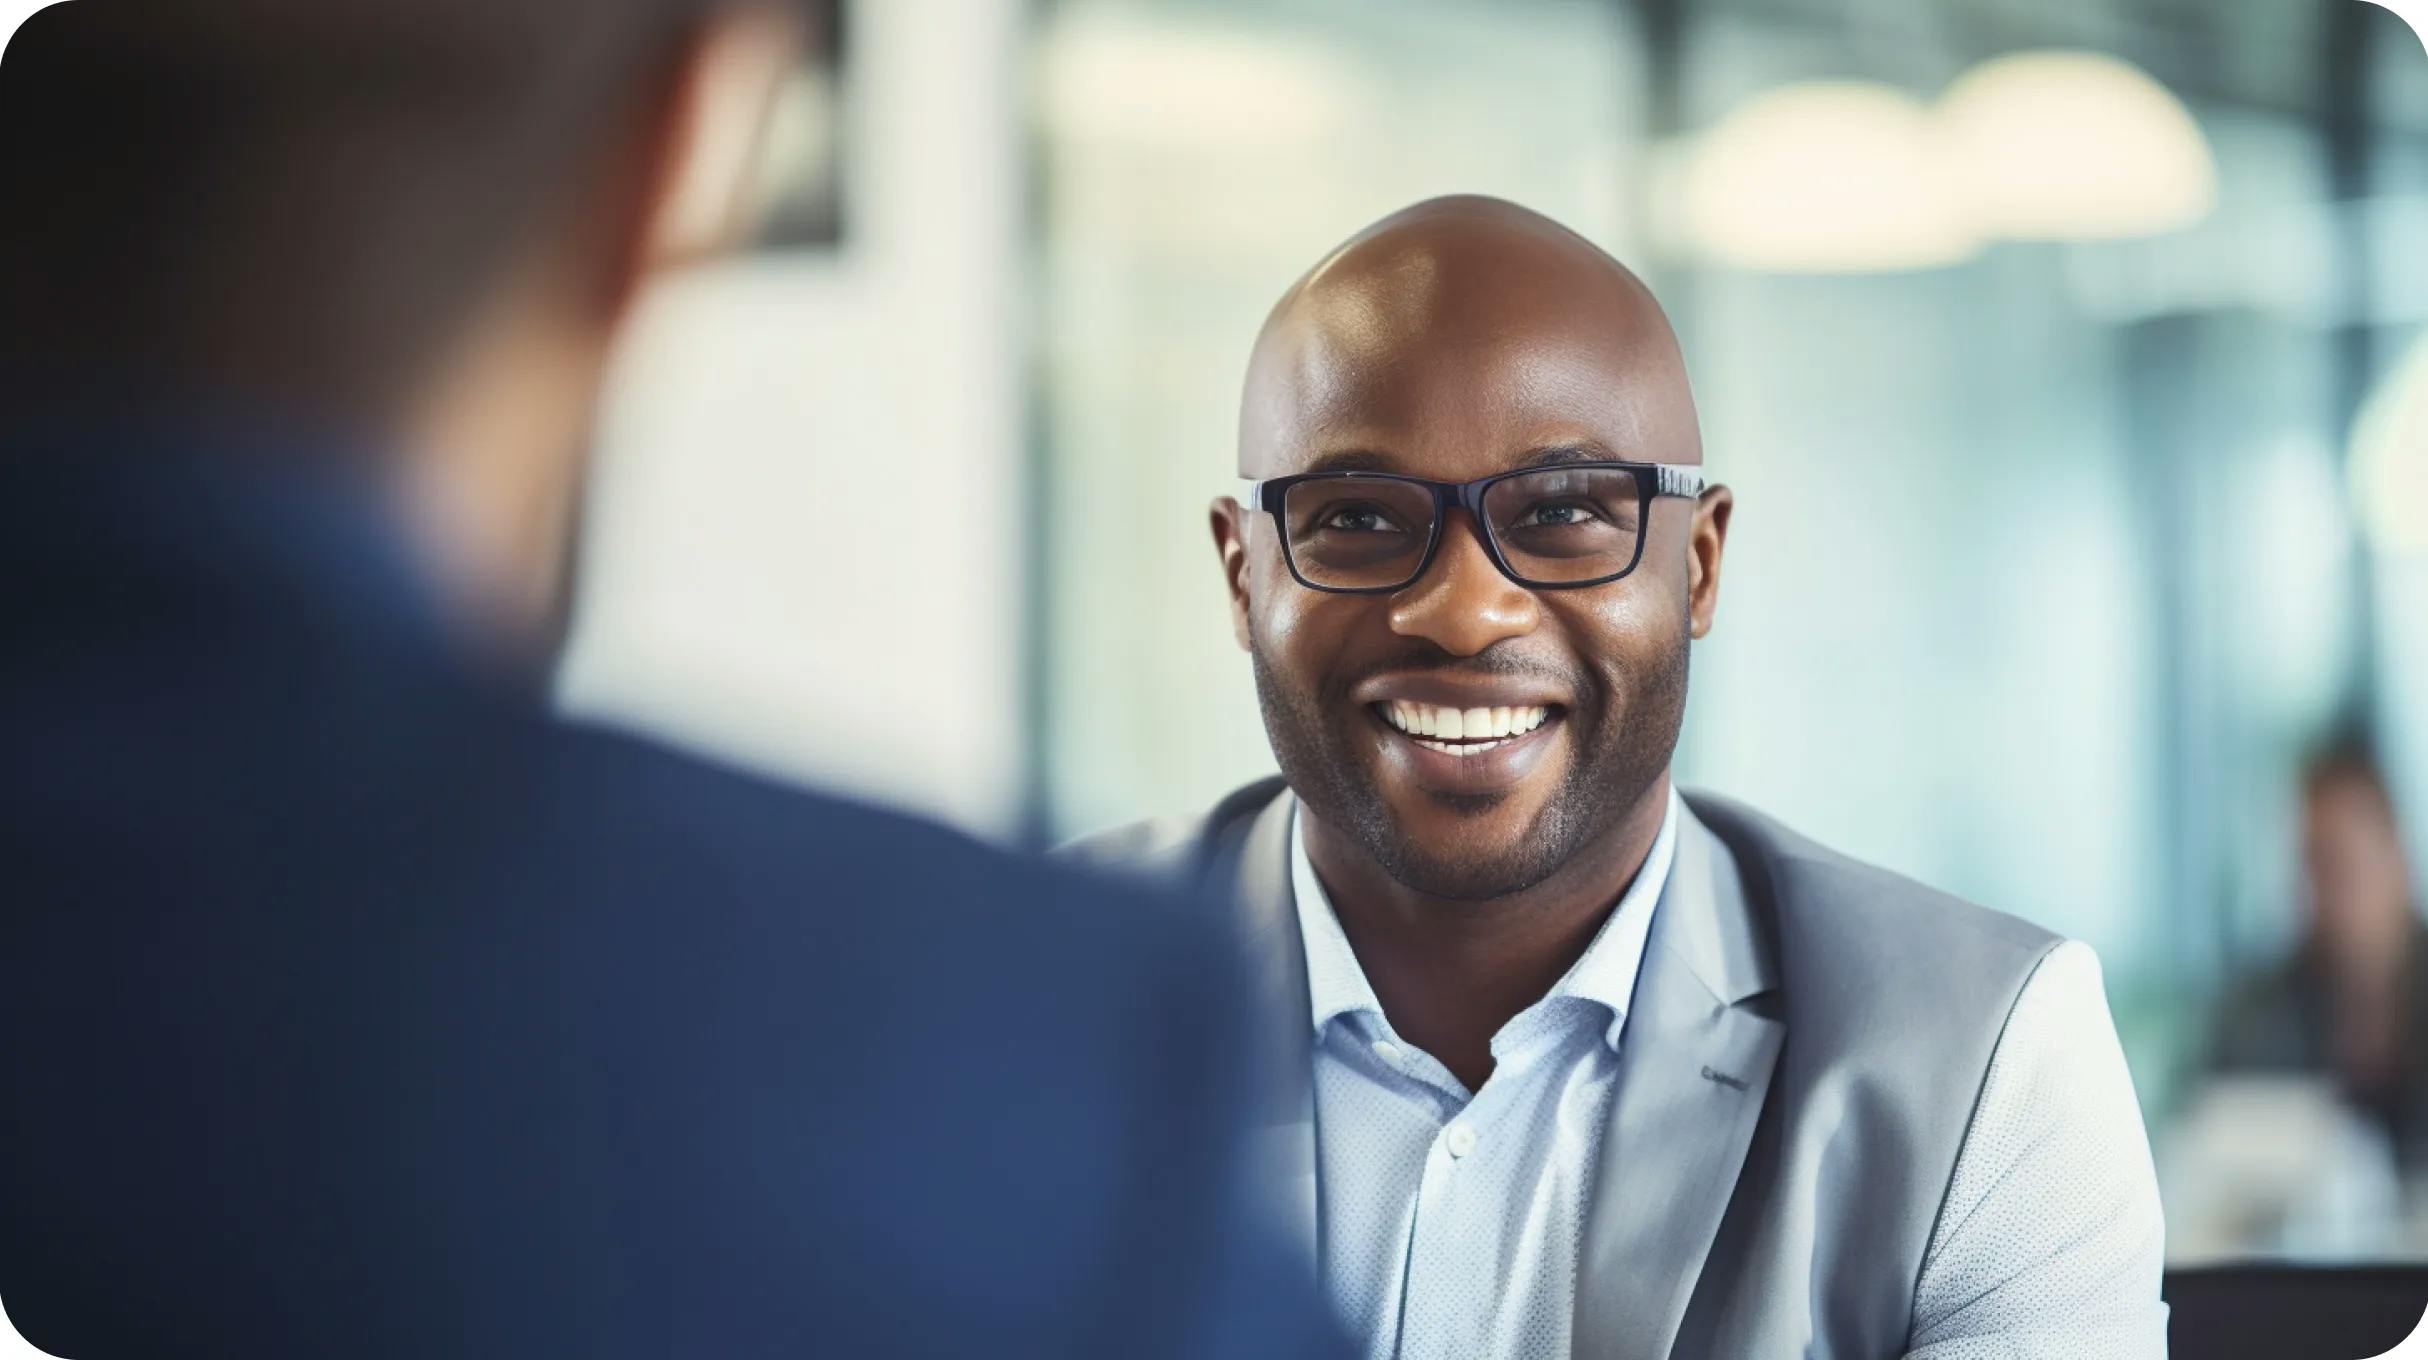 A black entrepreneur talking to a contractor